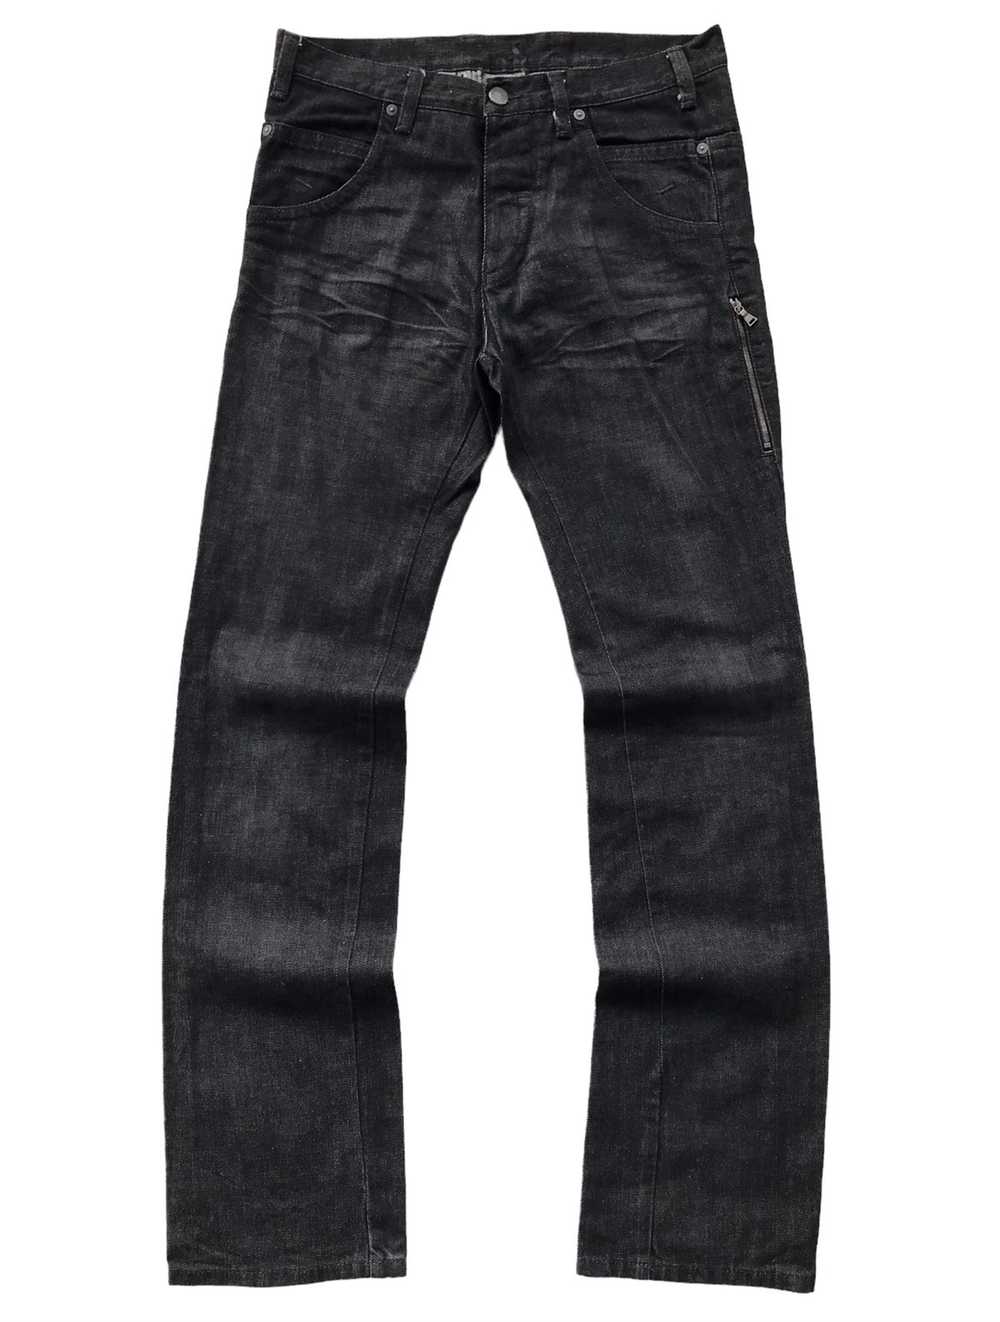 Rare NEIL BARRETT Buckle Back Flared Jeans - image 1